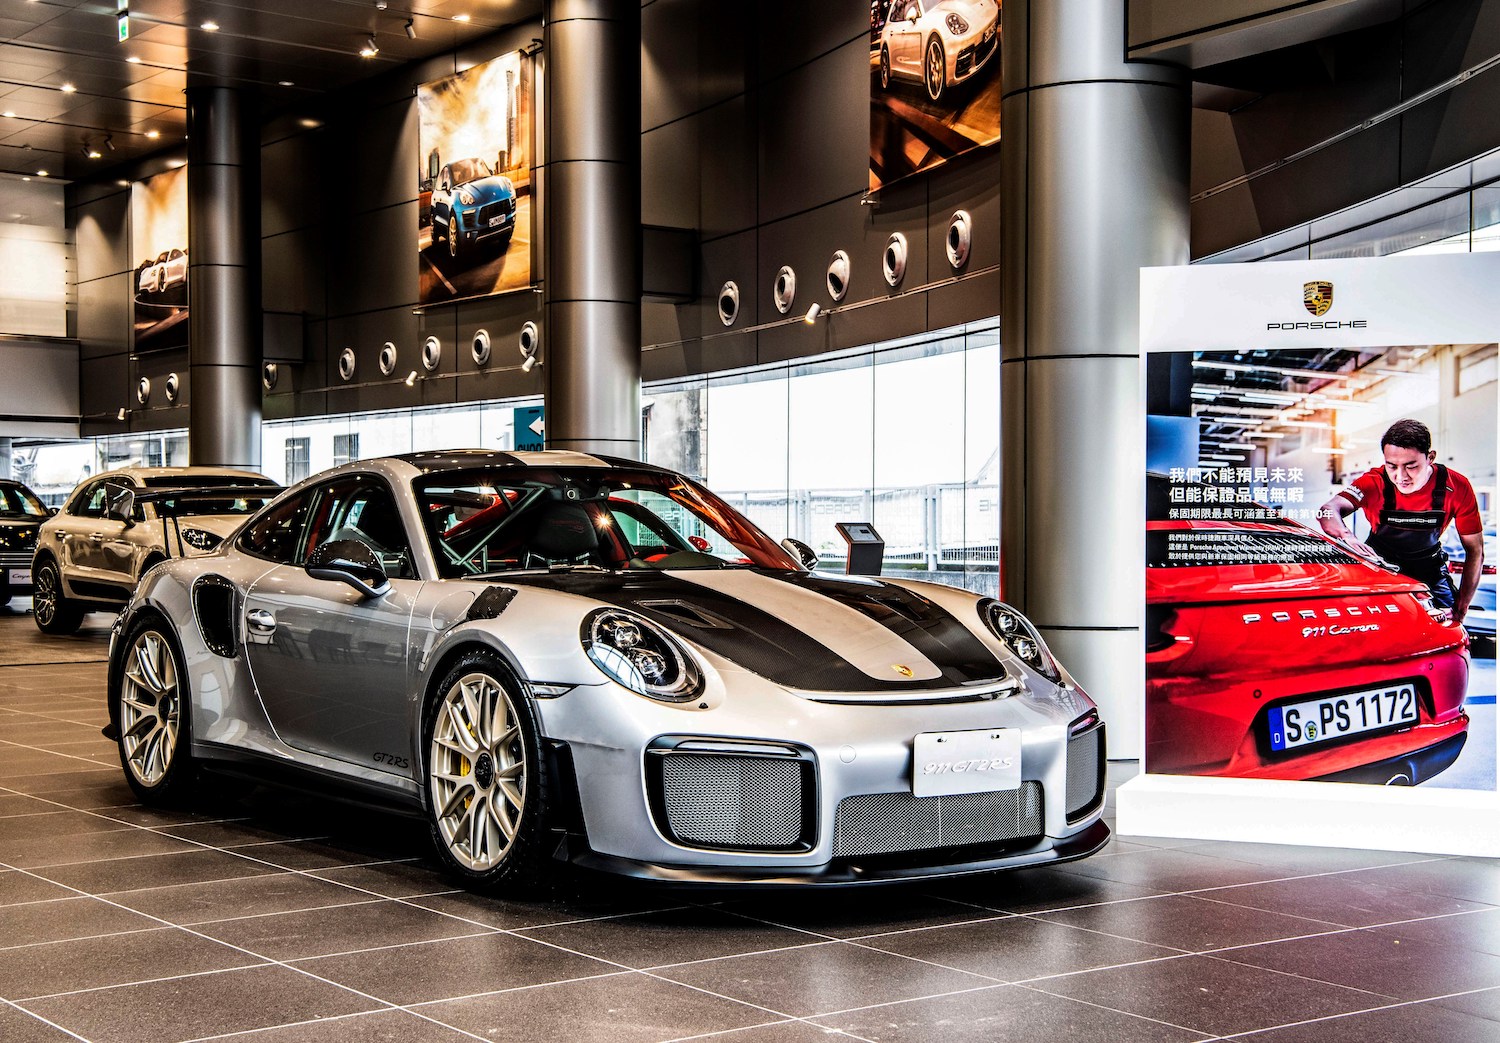 Porsche Approved Warranty保時捷認證保固服務提供與新車保固同等服務。